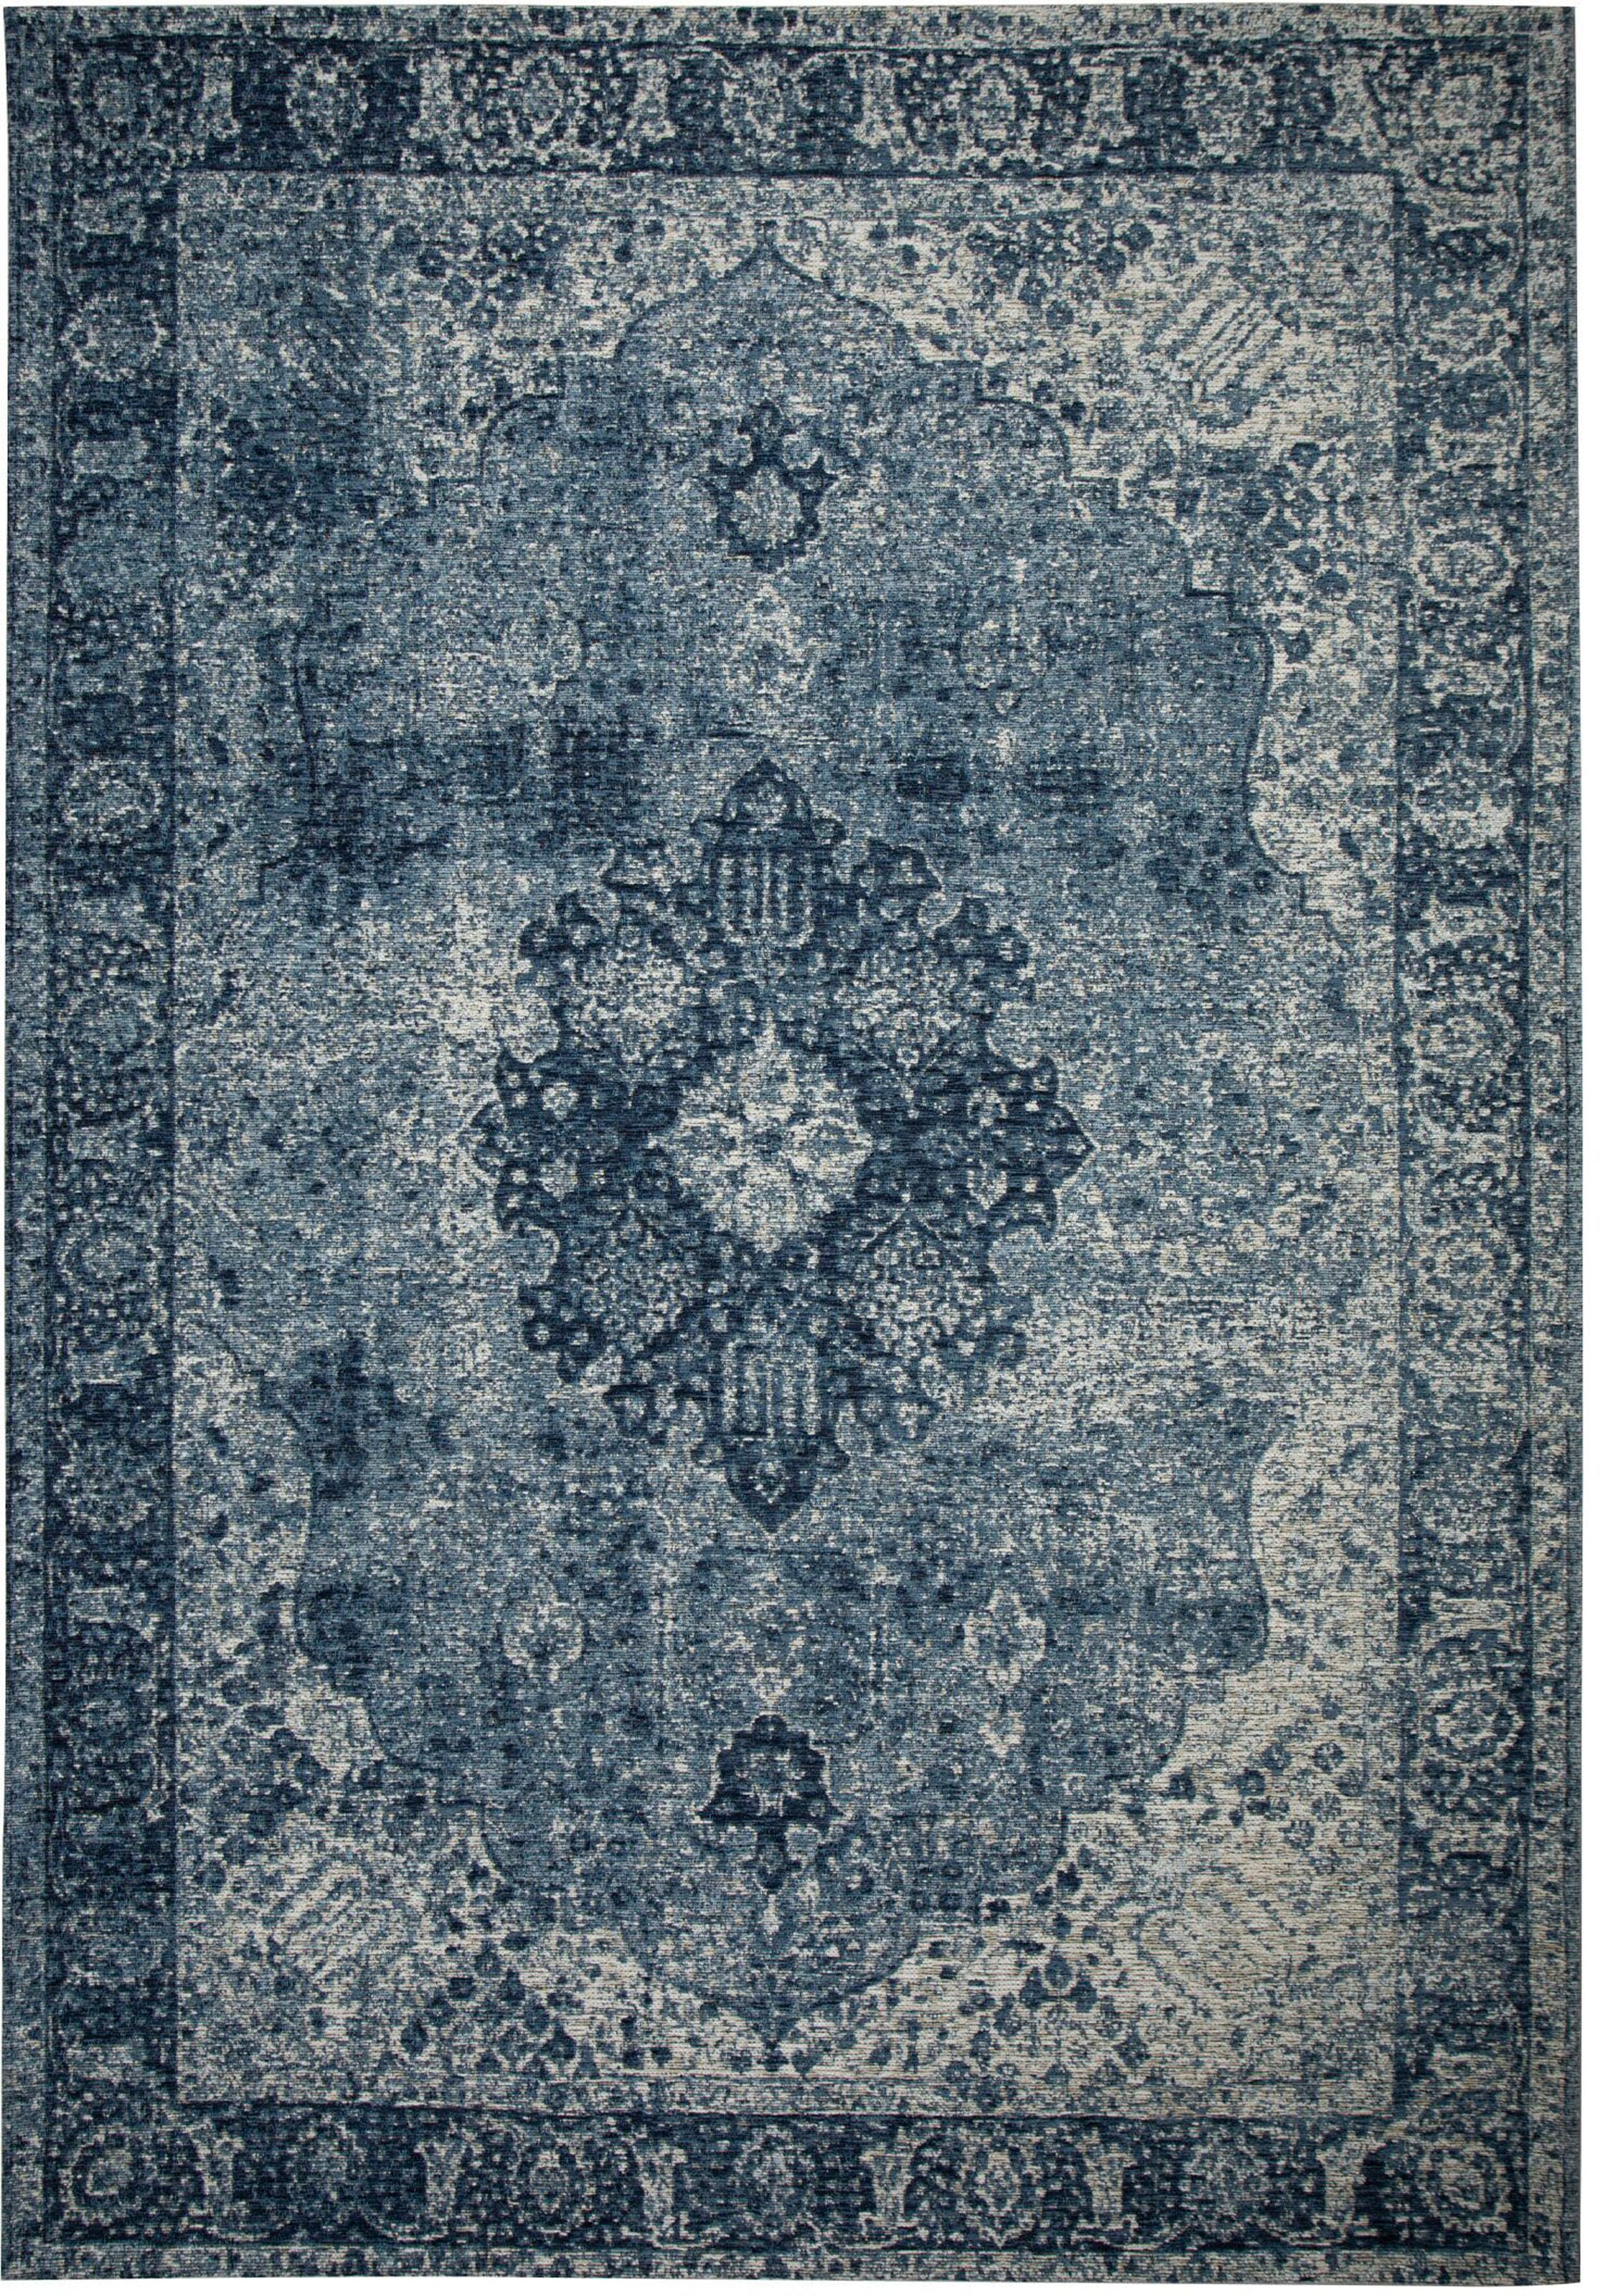 FLAIR RUGS Teppich »Antique«, rechteckig, Vintage-Muster